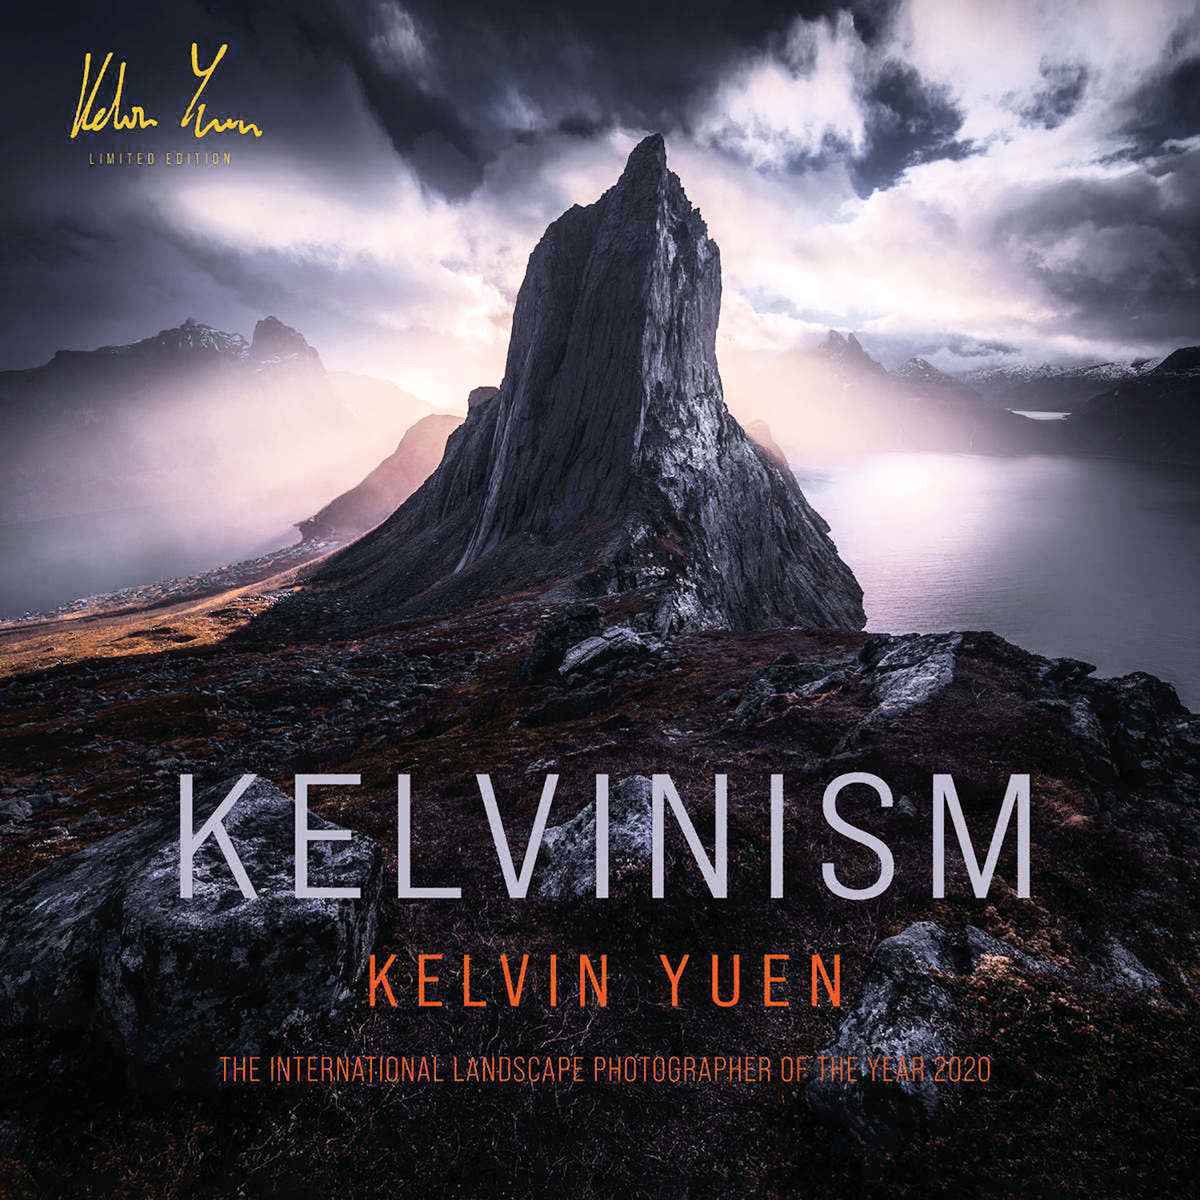  Kelvin Yuen將自己近年來拍攝的相片集結成個人首本作品集《KELVINISM》。